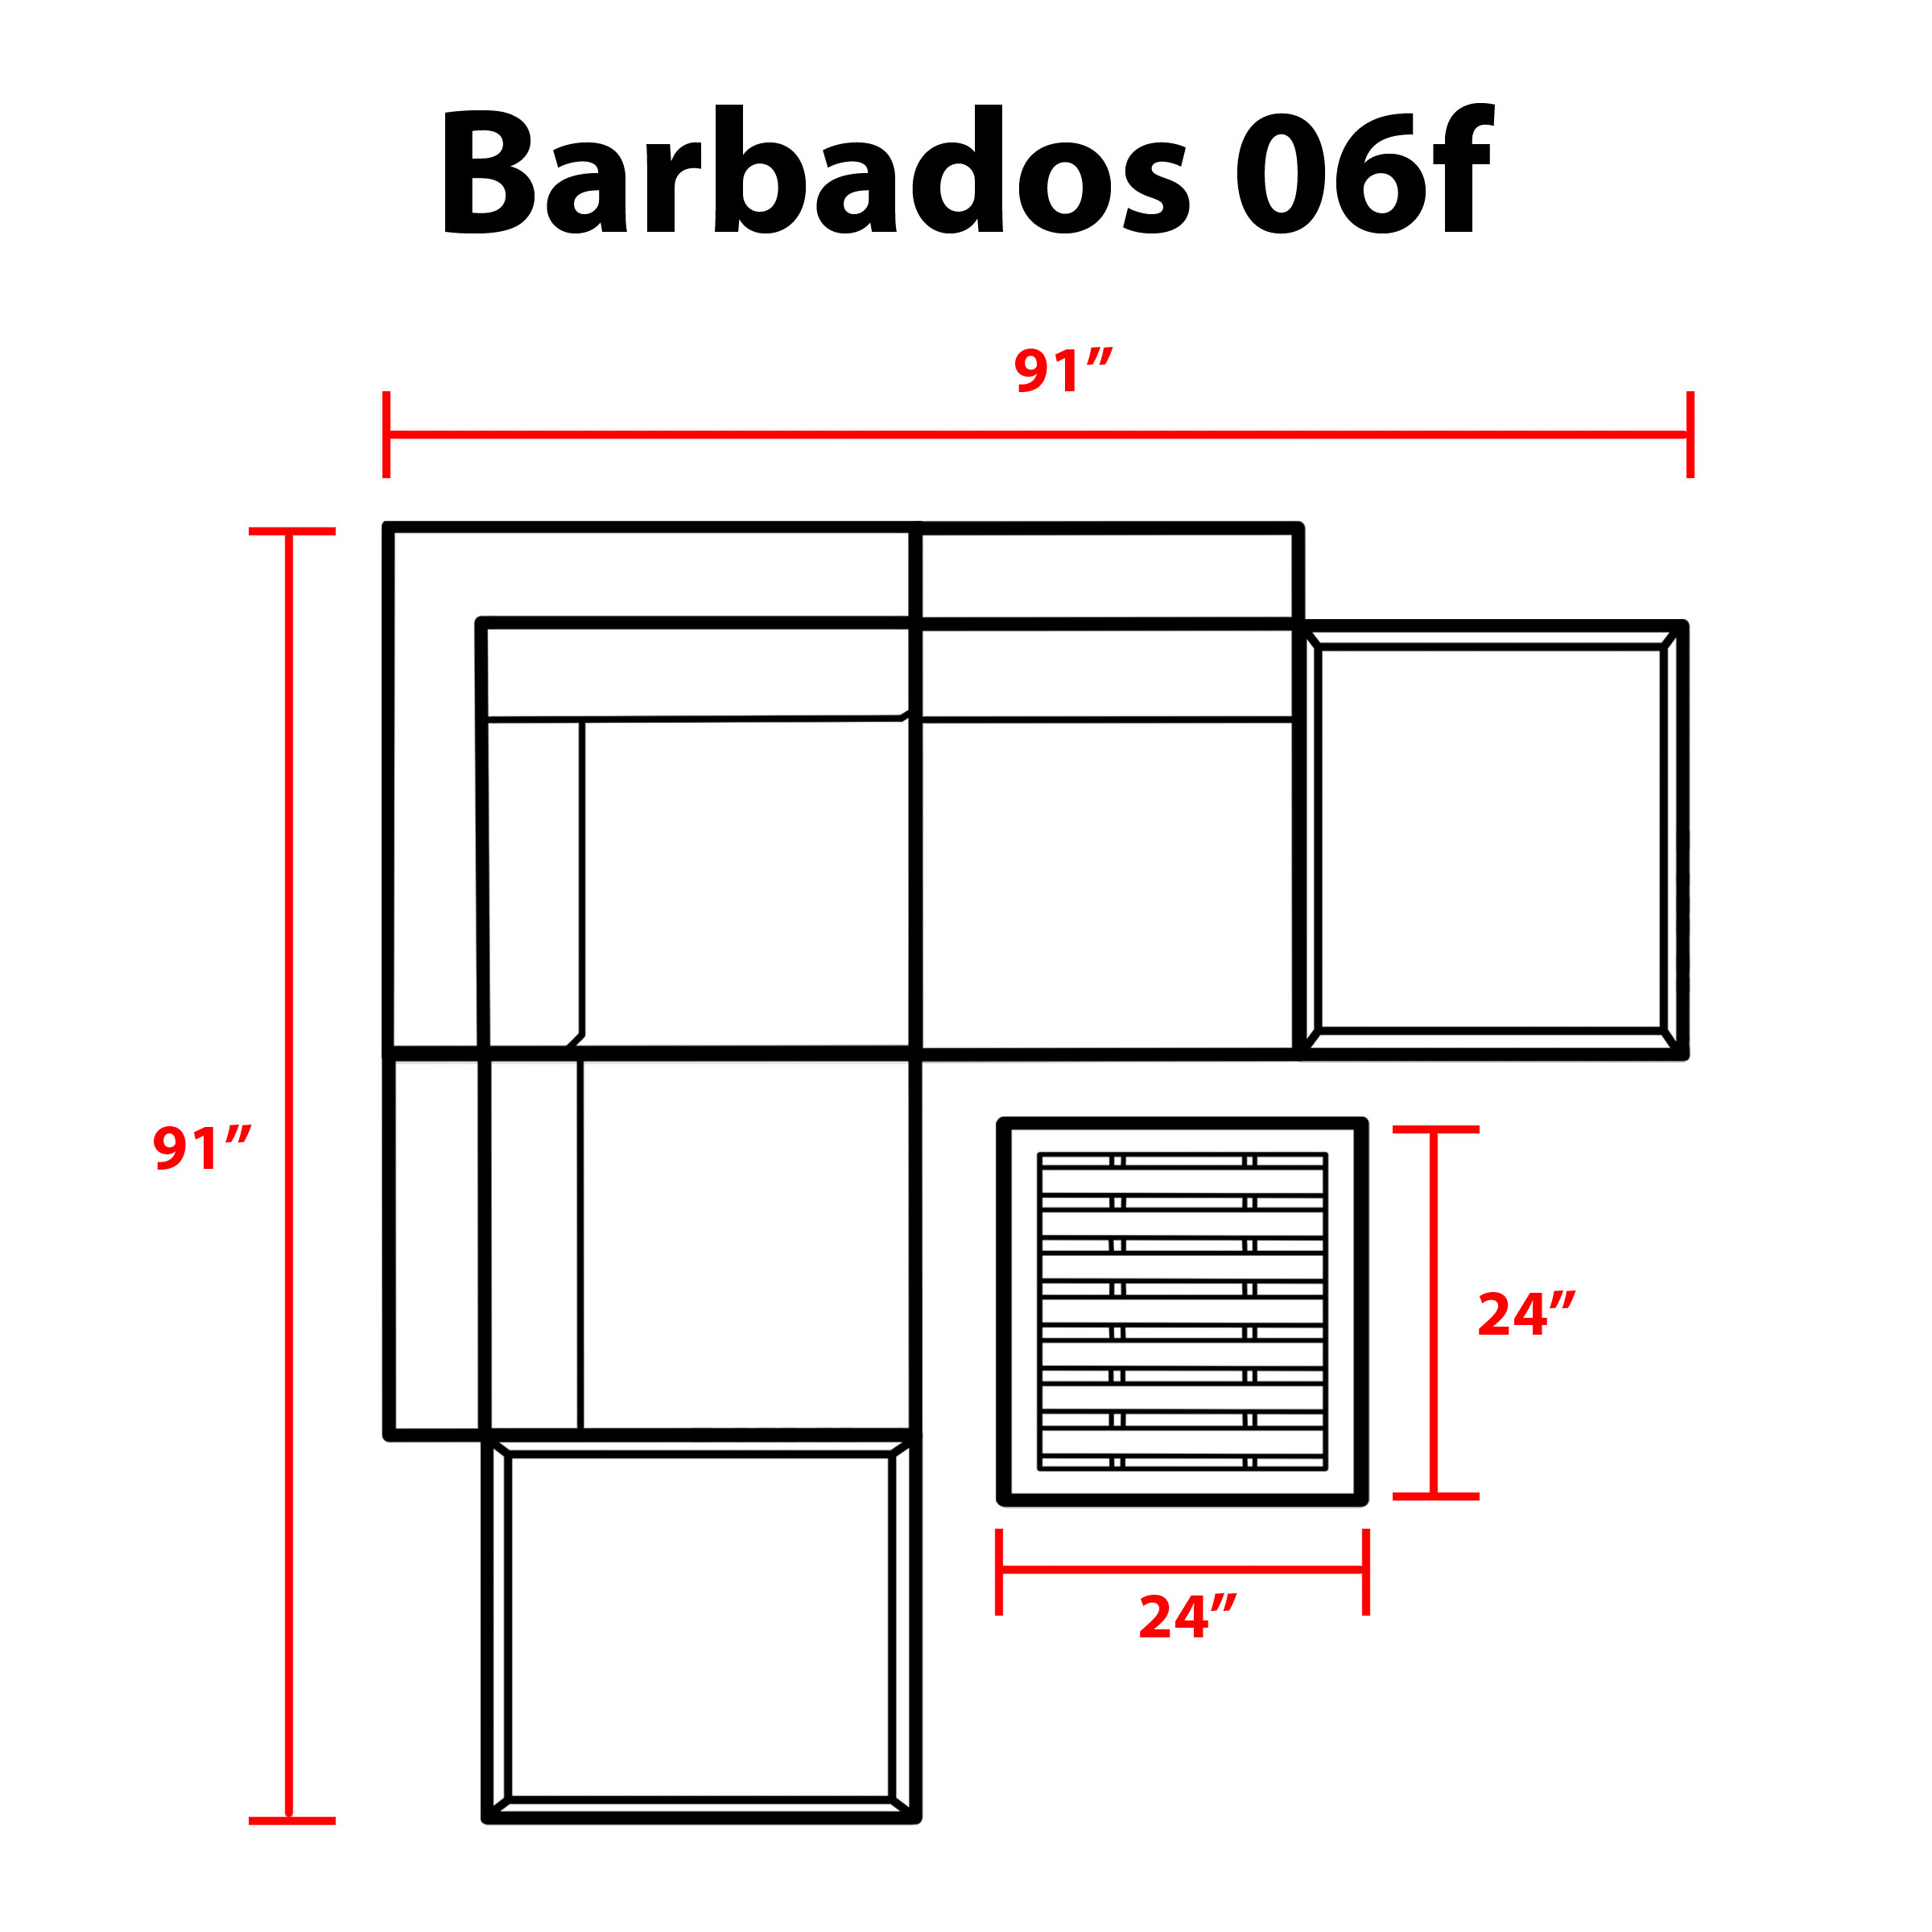 Barbados 6 Piece Outdoor Wicker Patio Furniture Set 06f - TK Classics